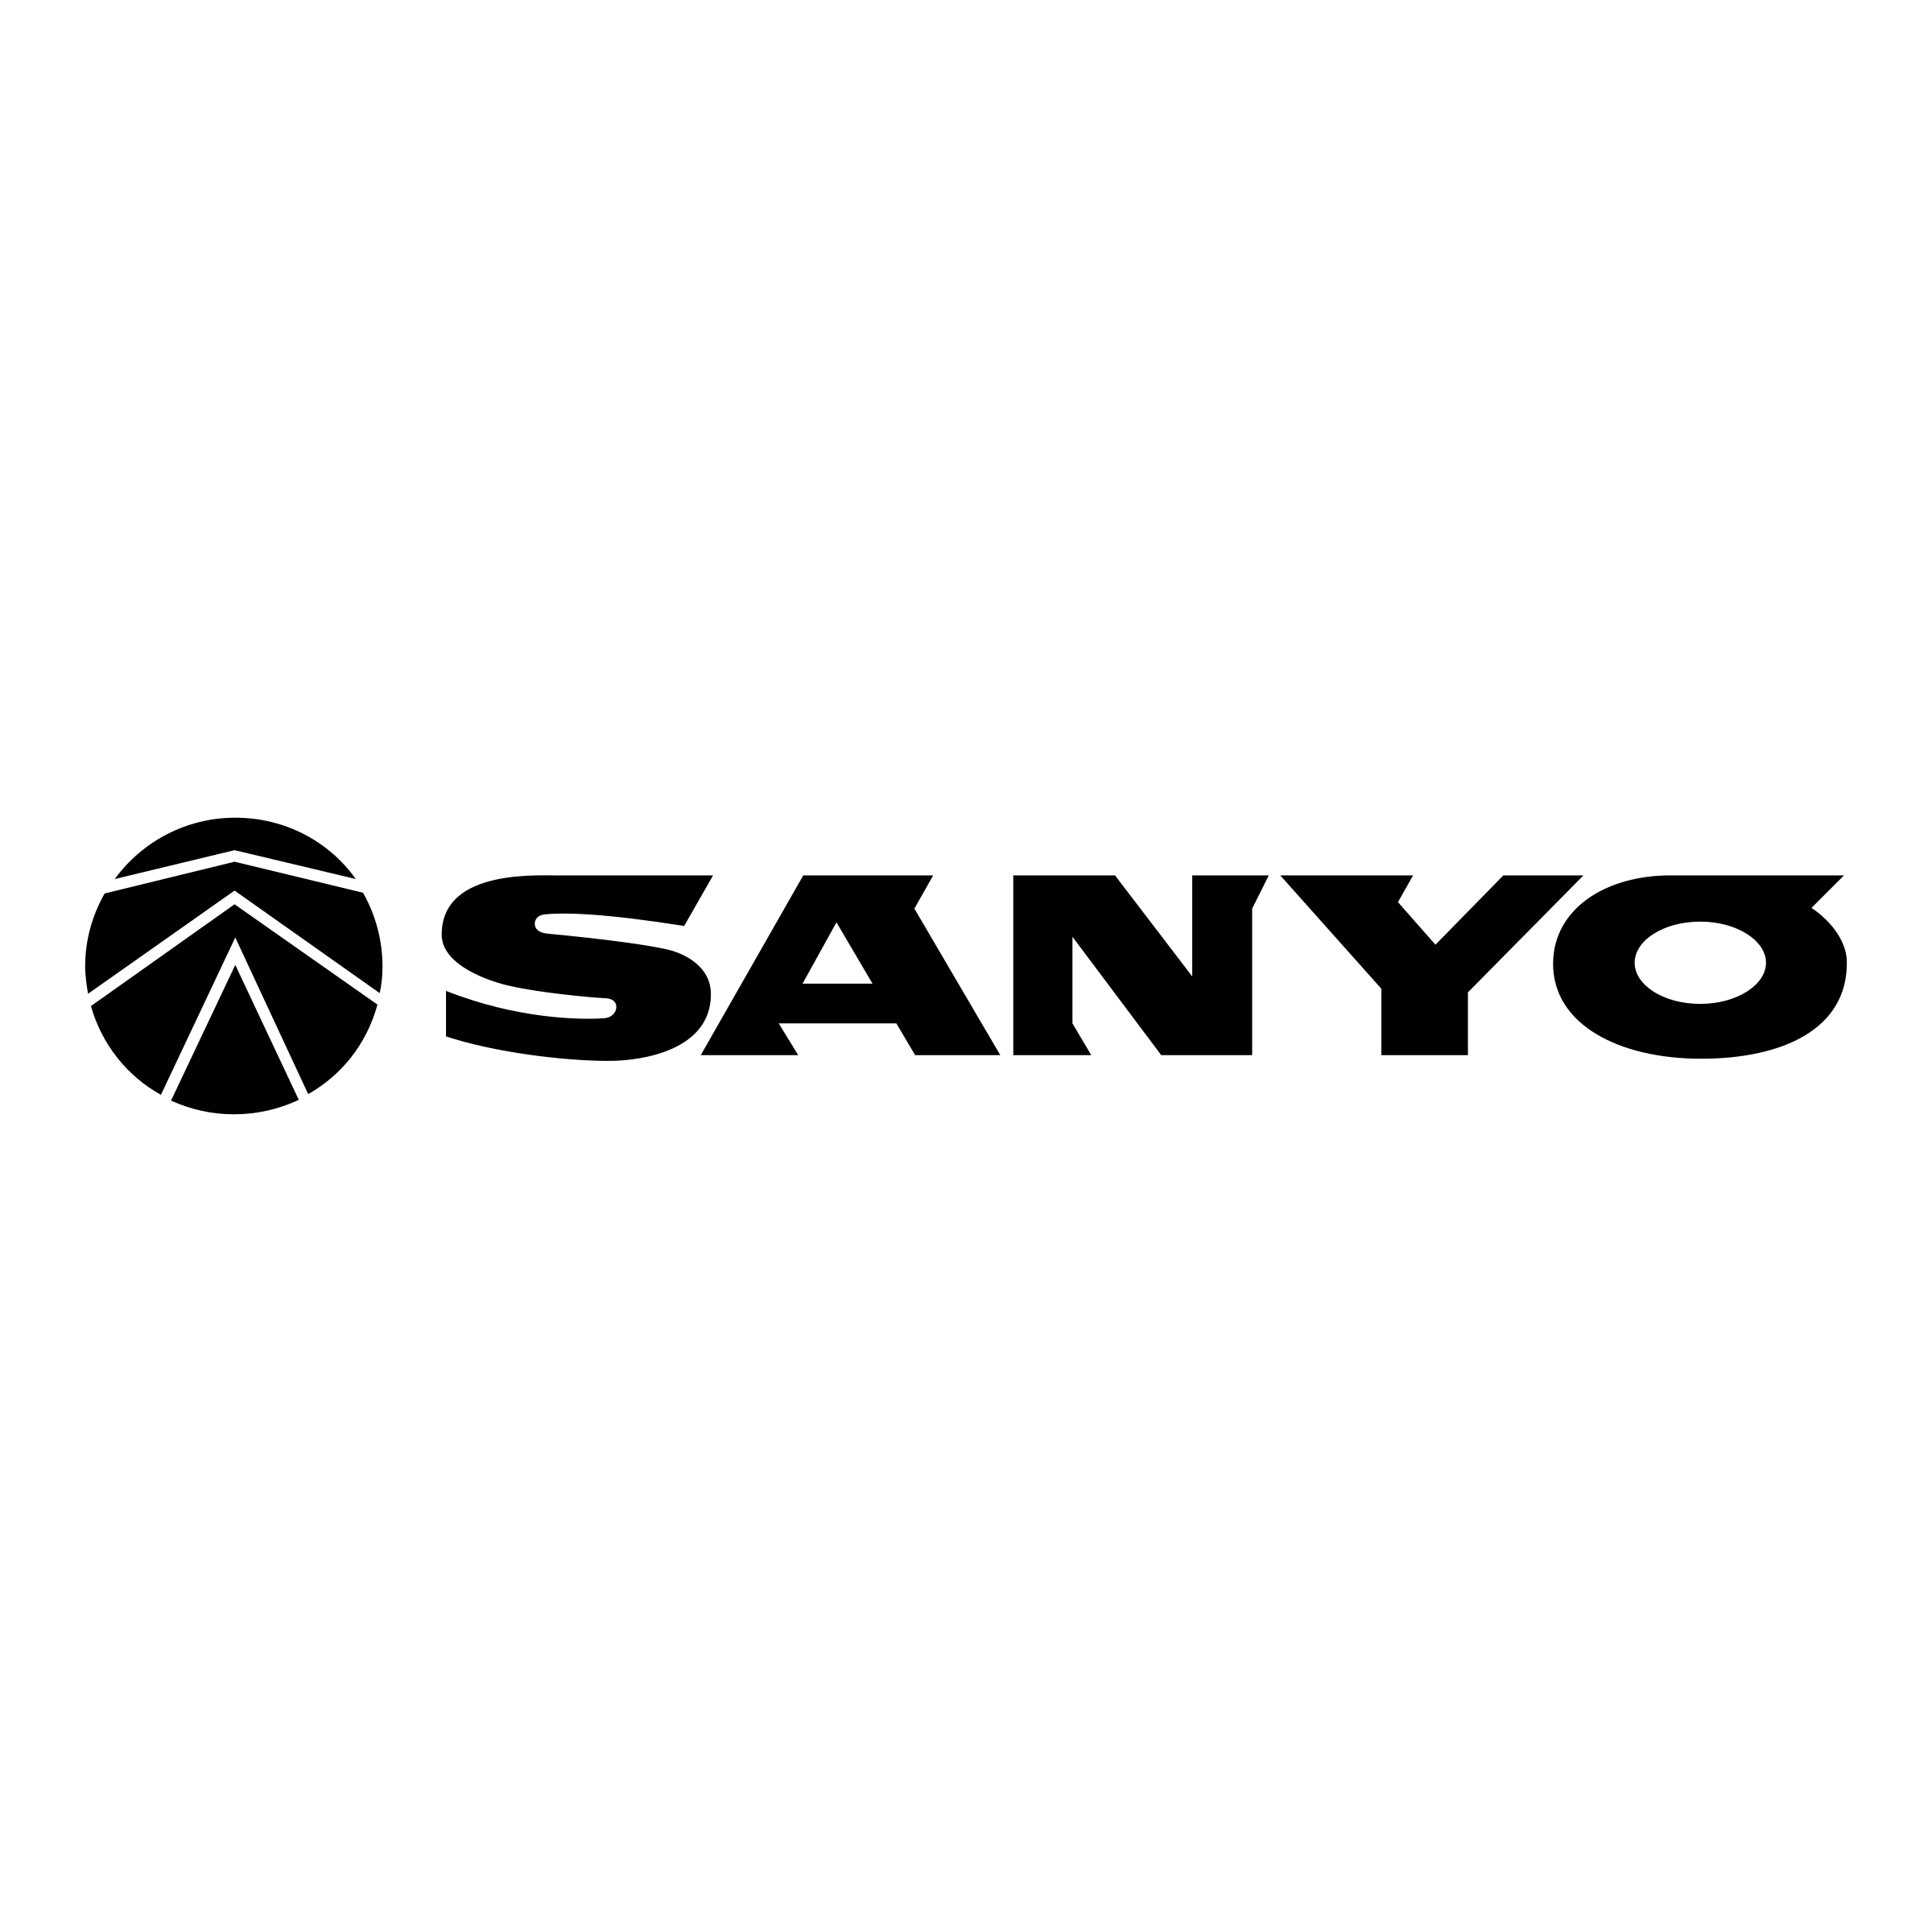 Sanyo Logo - Sanyo Logo PNG Transparent & SVG Vector - Freebie Supply